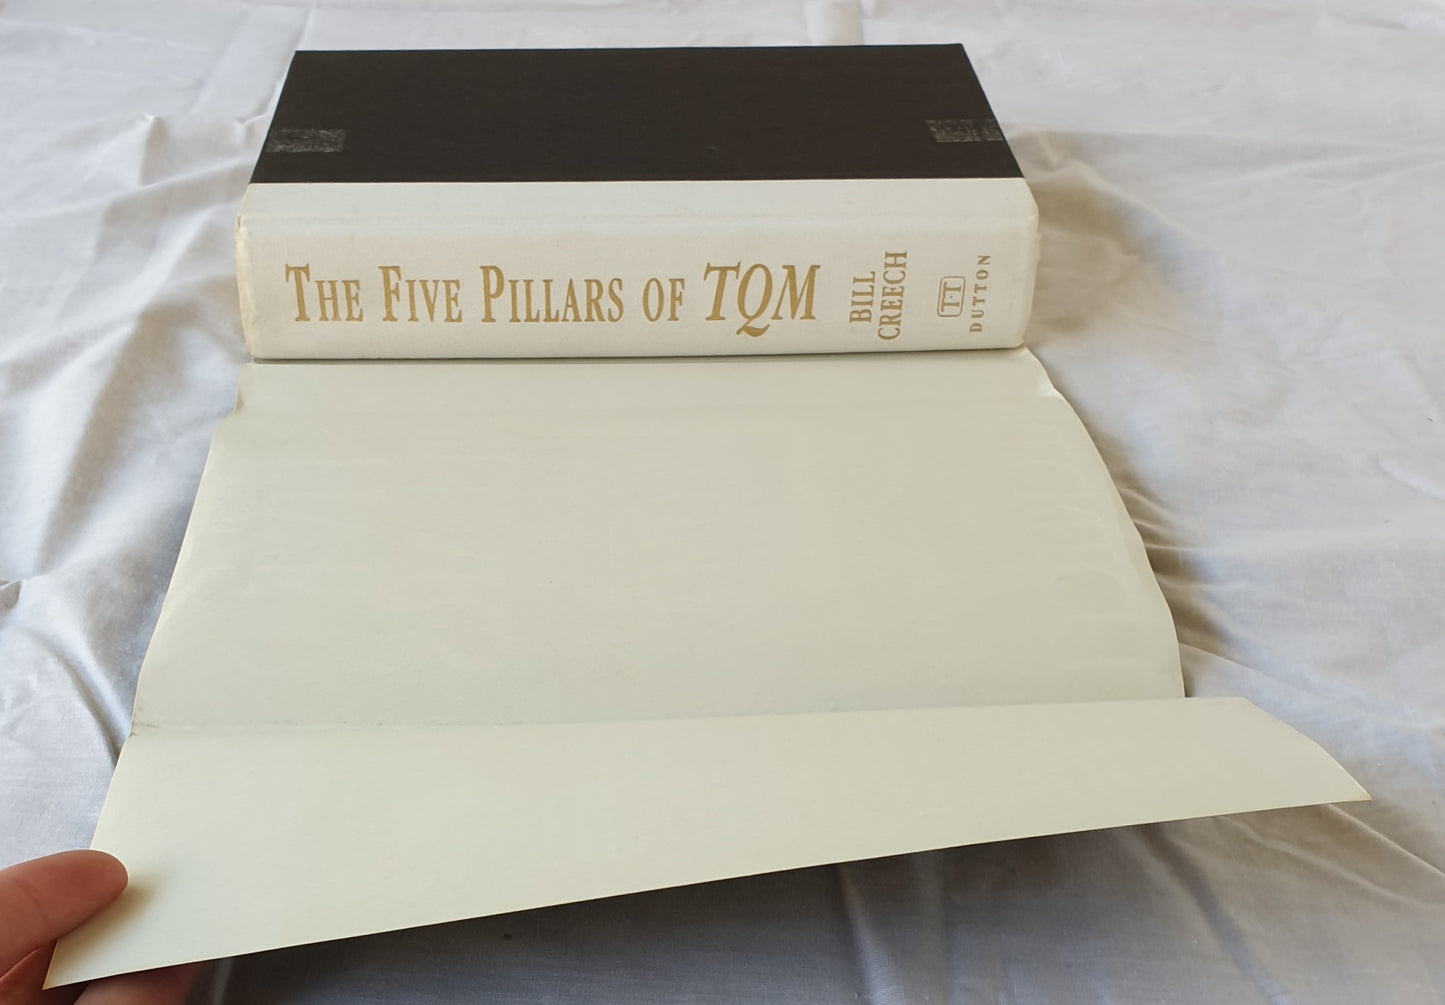 The Five Pillars of TQM by Bill Creech